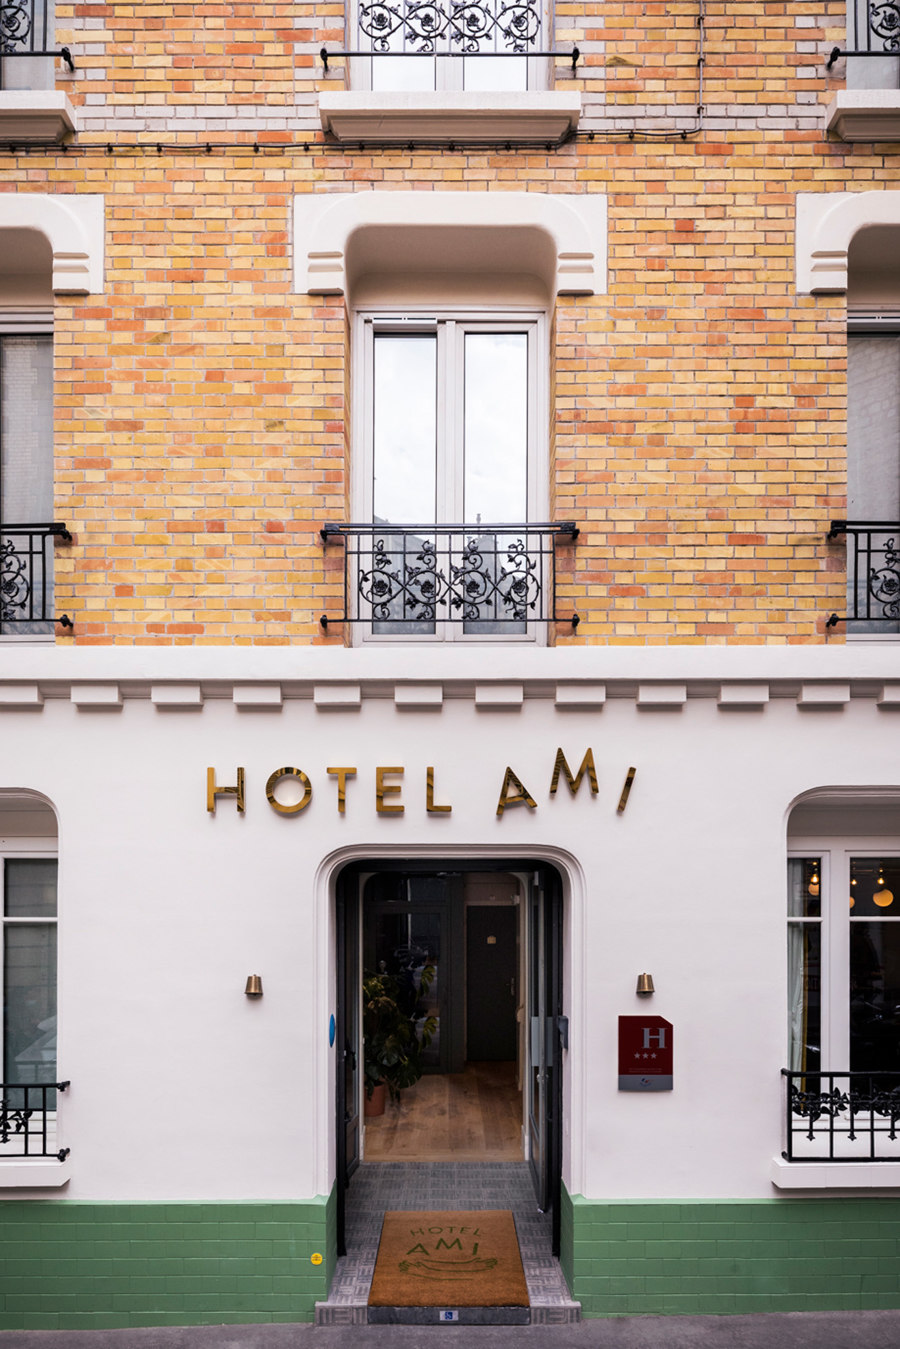 Hotel Ami by Villeroy & Boch | Manufacturer references